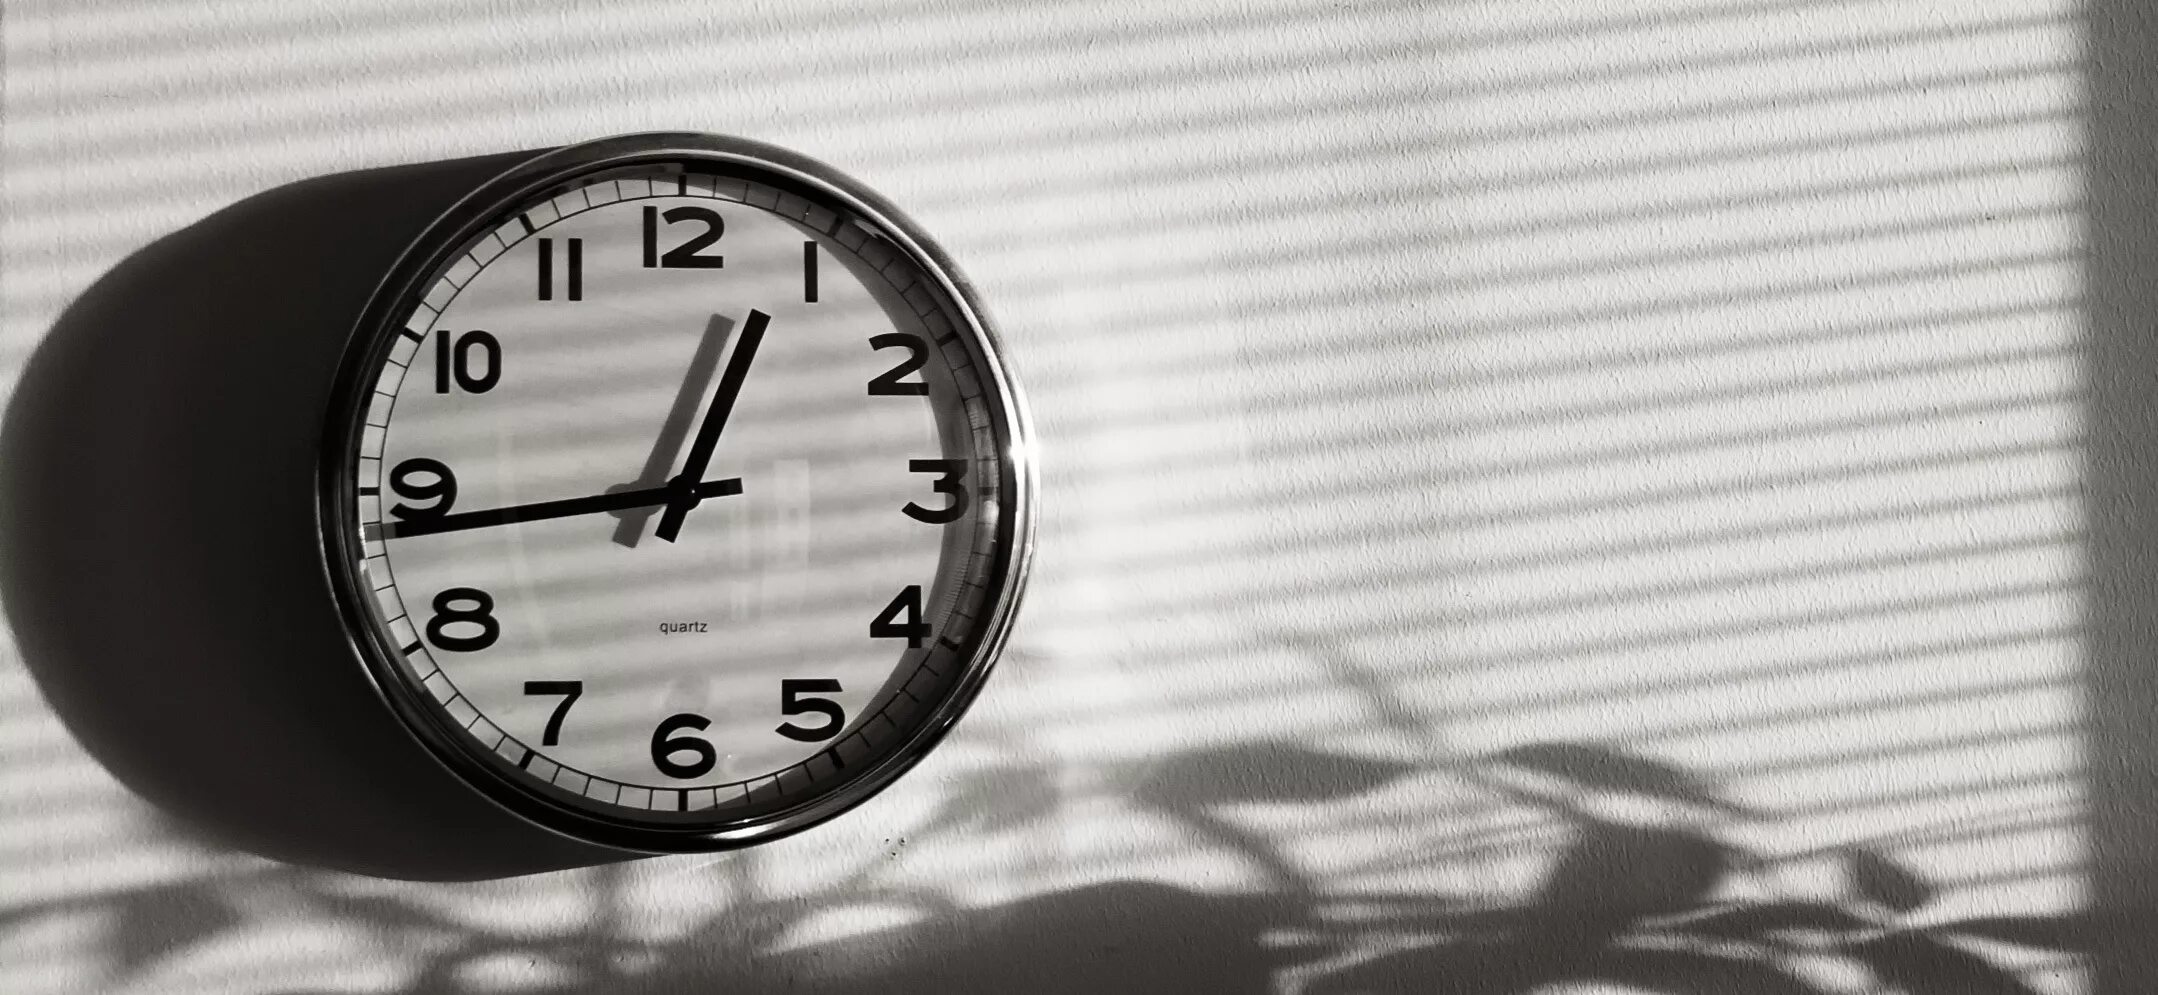 Время на часах 12 15. Часы и время. Часы 1 минута. Часы 1 час ночи. Часы пятнадцать минут.